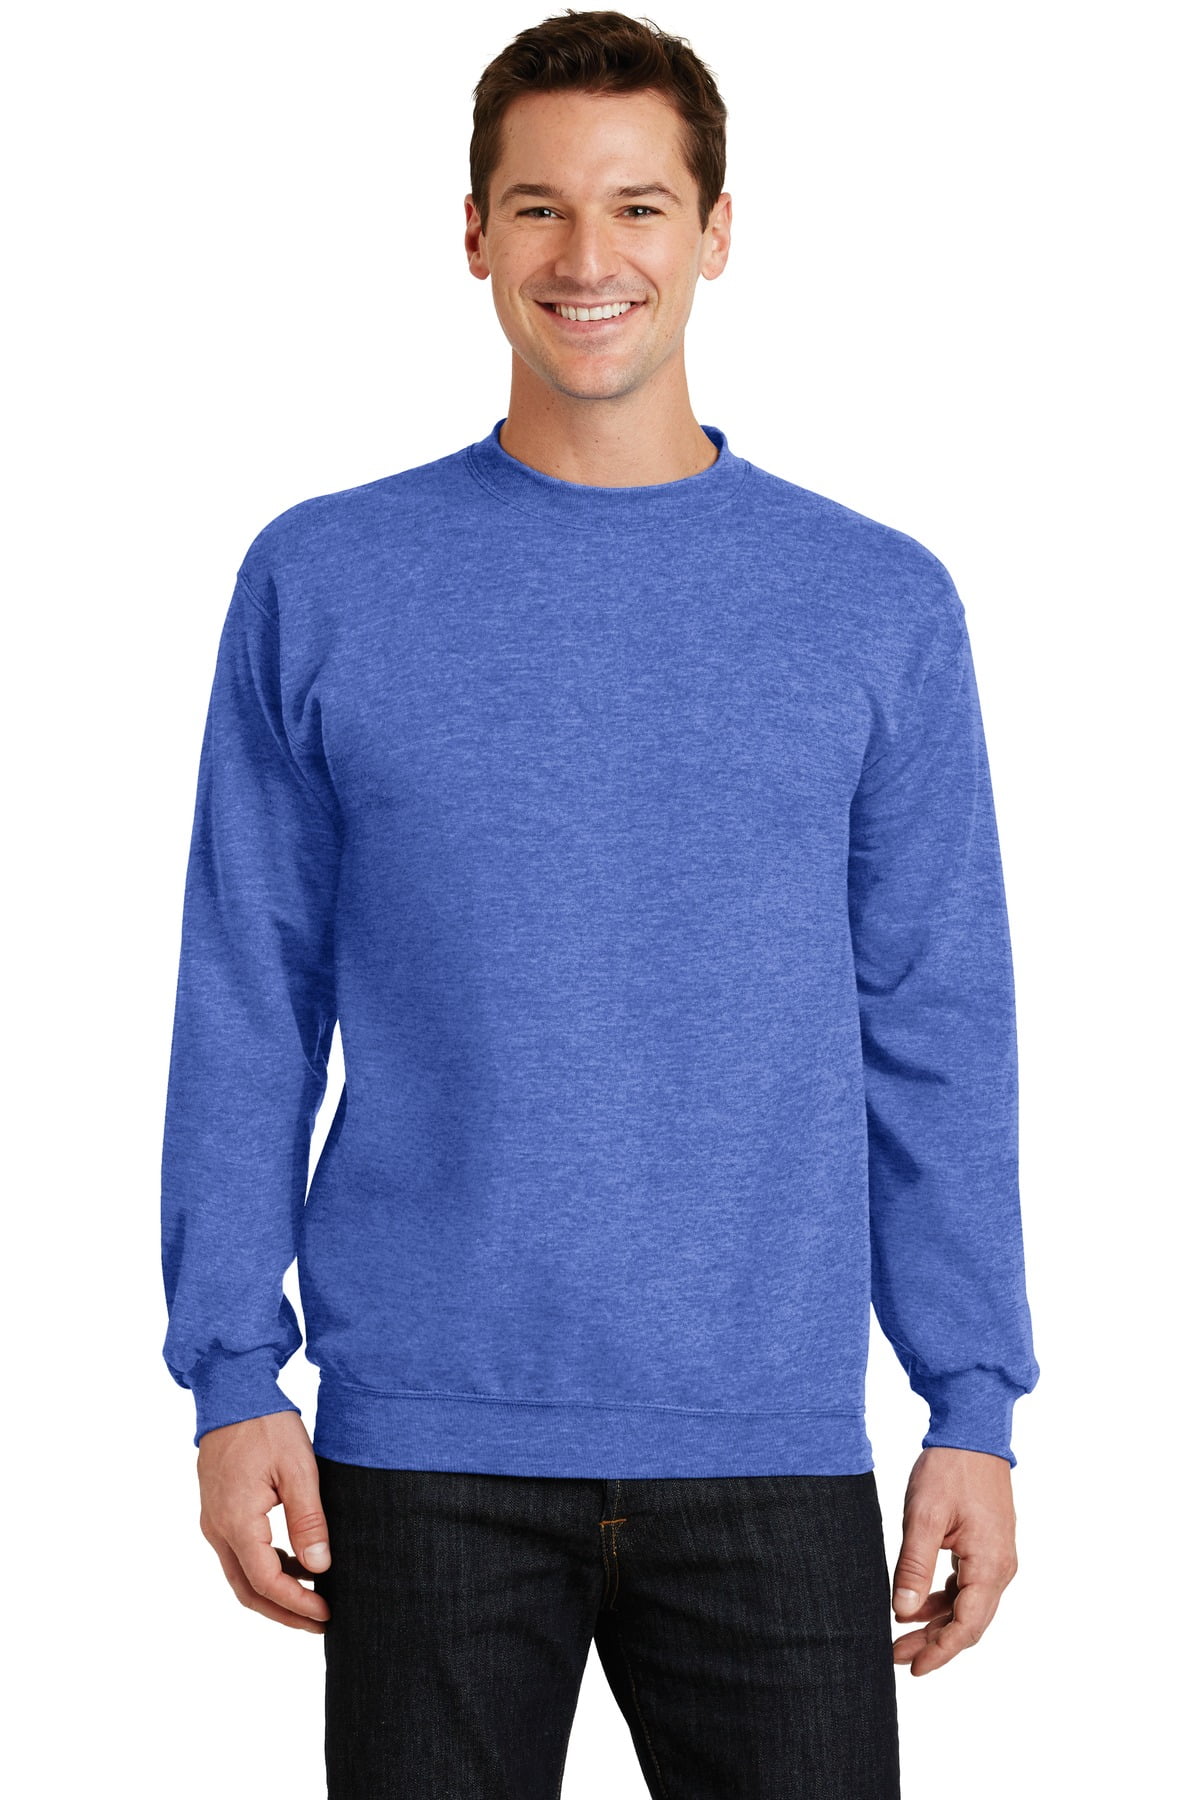 Crewneck Sweatshirt Sport Gray MEDIUM American University Eagles 50/50 Blended 8 oz